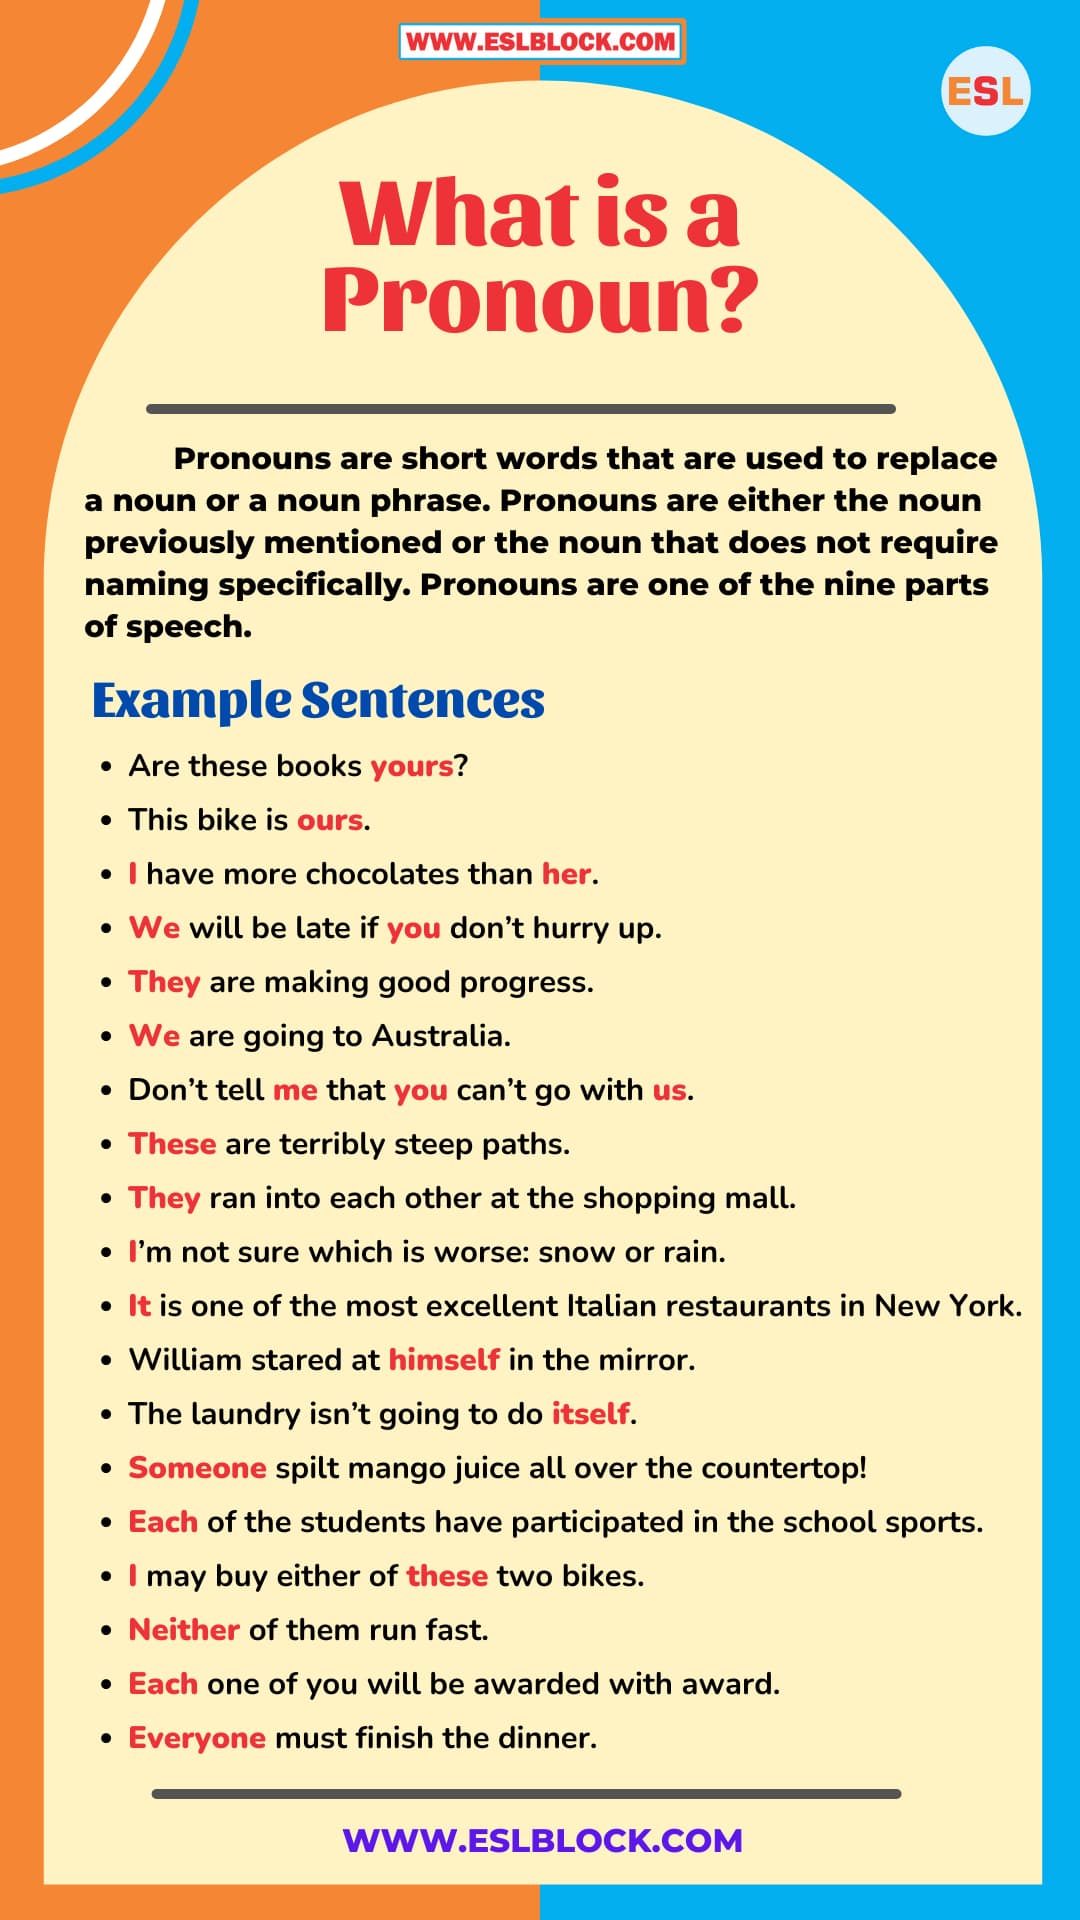 English Grammar, Parts of Speech, Parts of Speech in English Grammar, Pronoun, What is a Pronoun, Personal pronouns, Antecedents, Relative pronouns, Demonstrative pronouns, Indefinite pronouns, Reflexive pronouns, Intensive pronouns, Possessive pronouns, Interrogative pronouns, Reciprocal pronouns, Distributive pronouns,